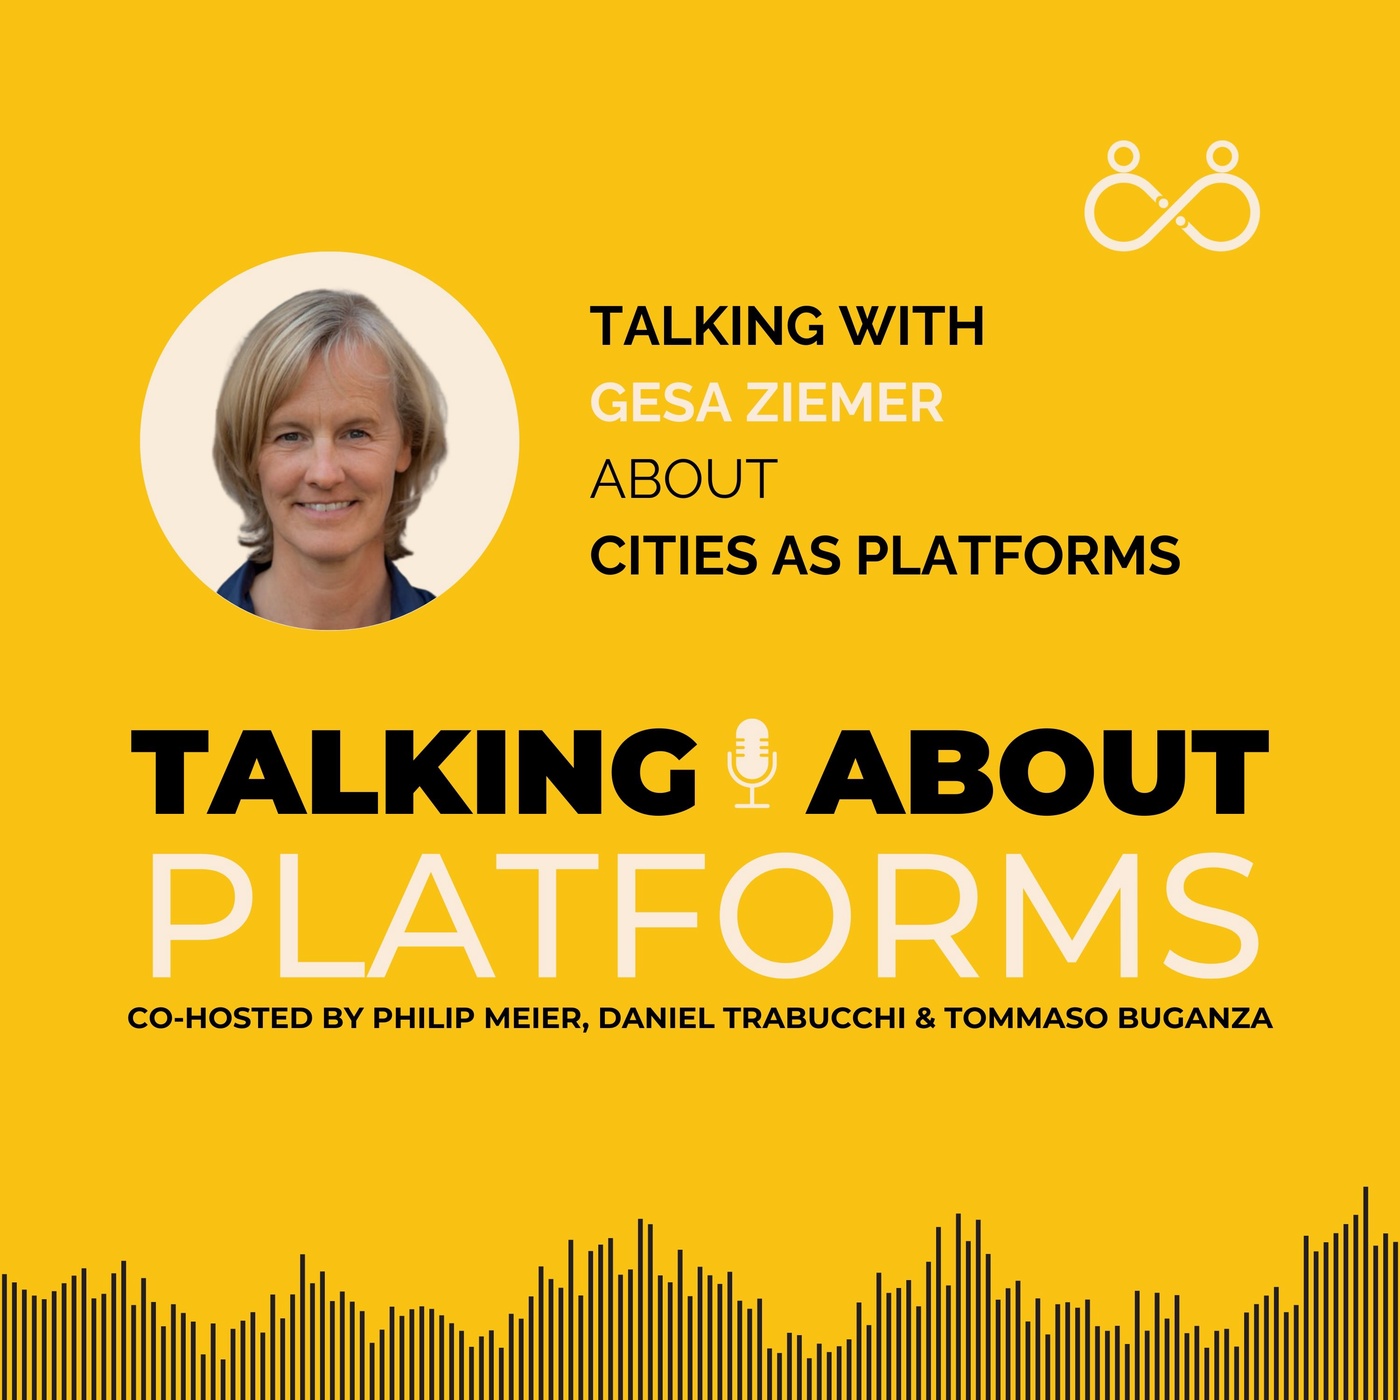 Cities as platforms with Gesa Ziemer